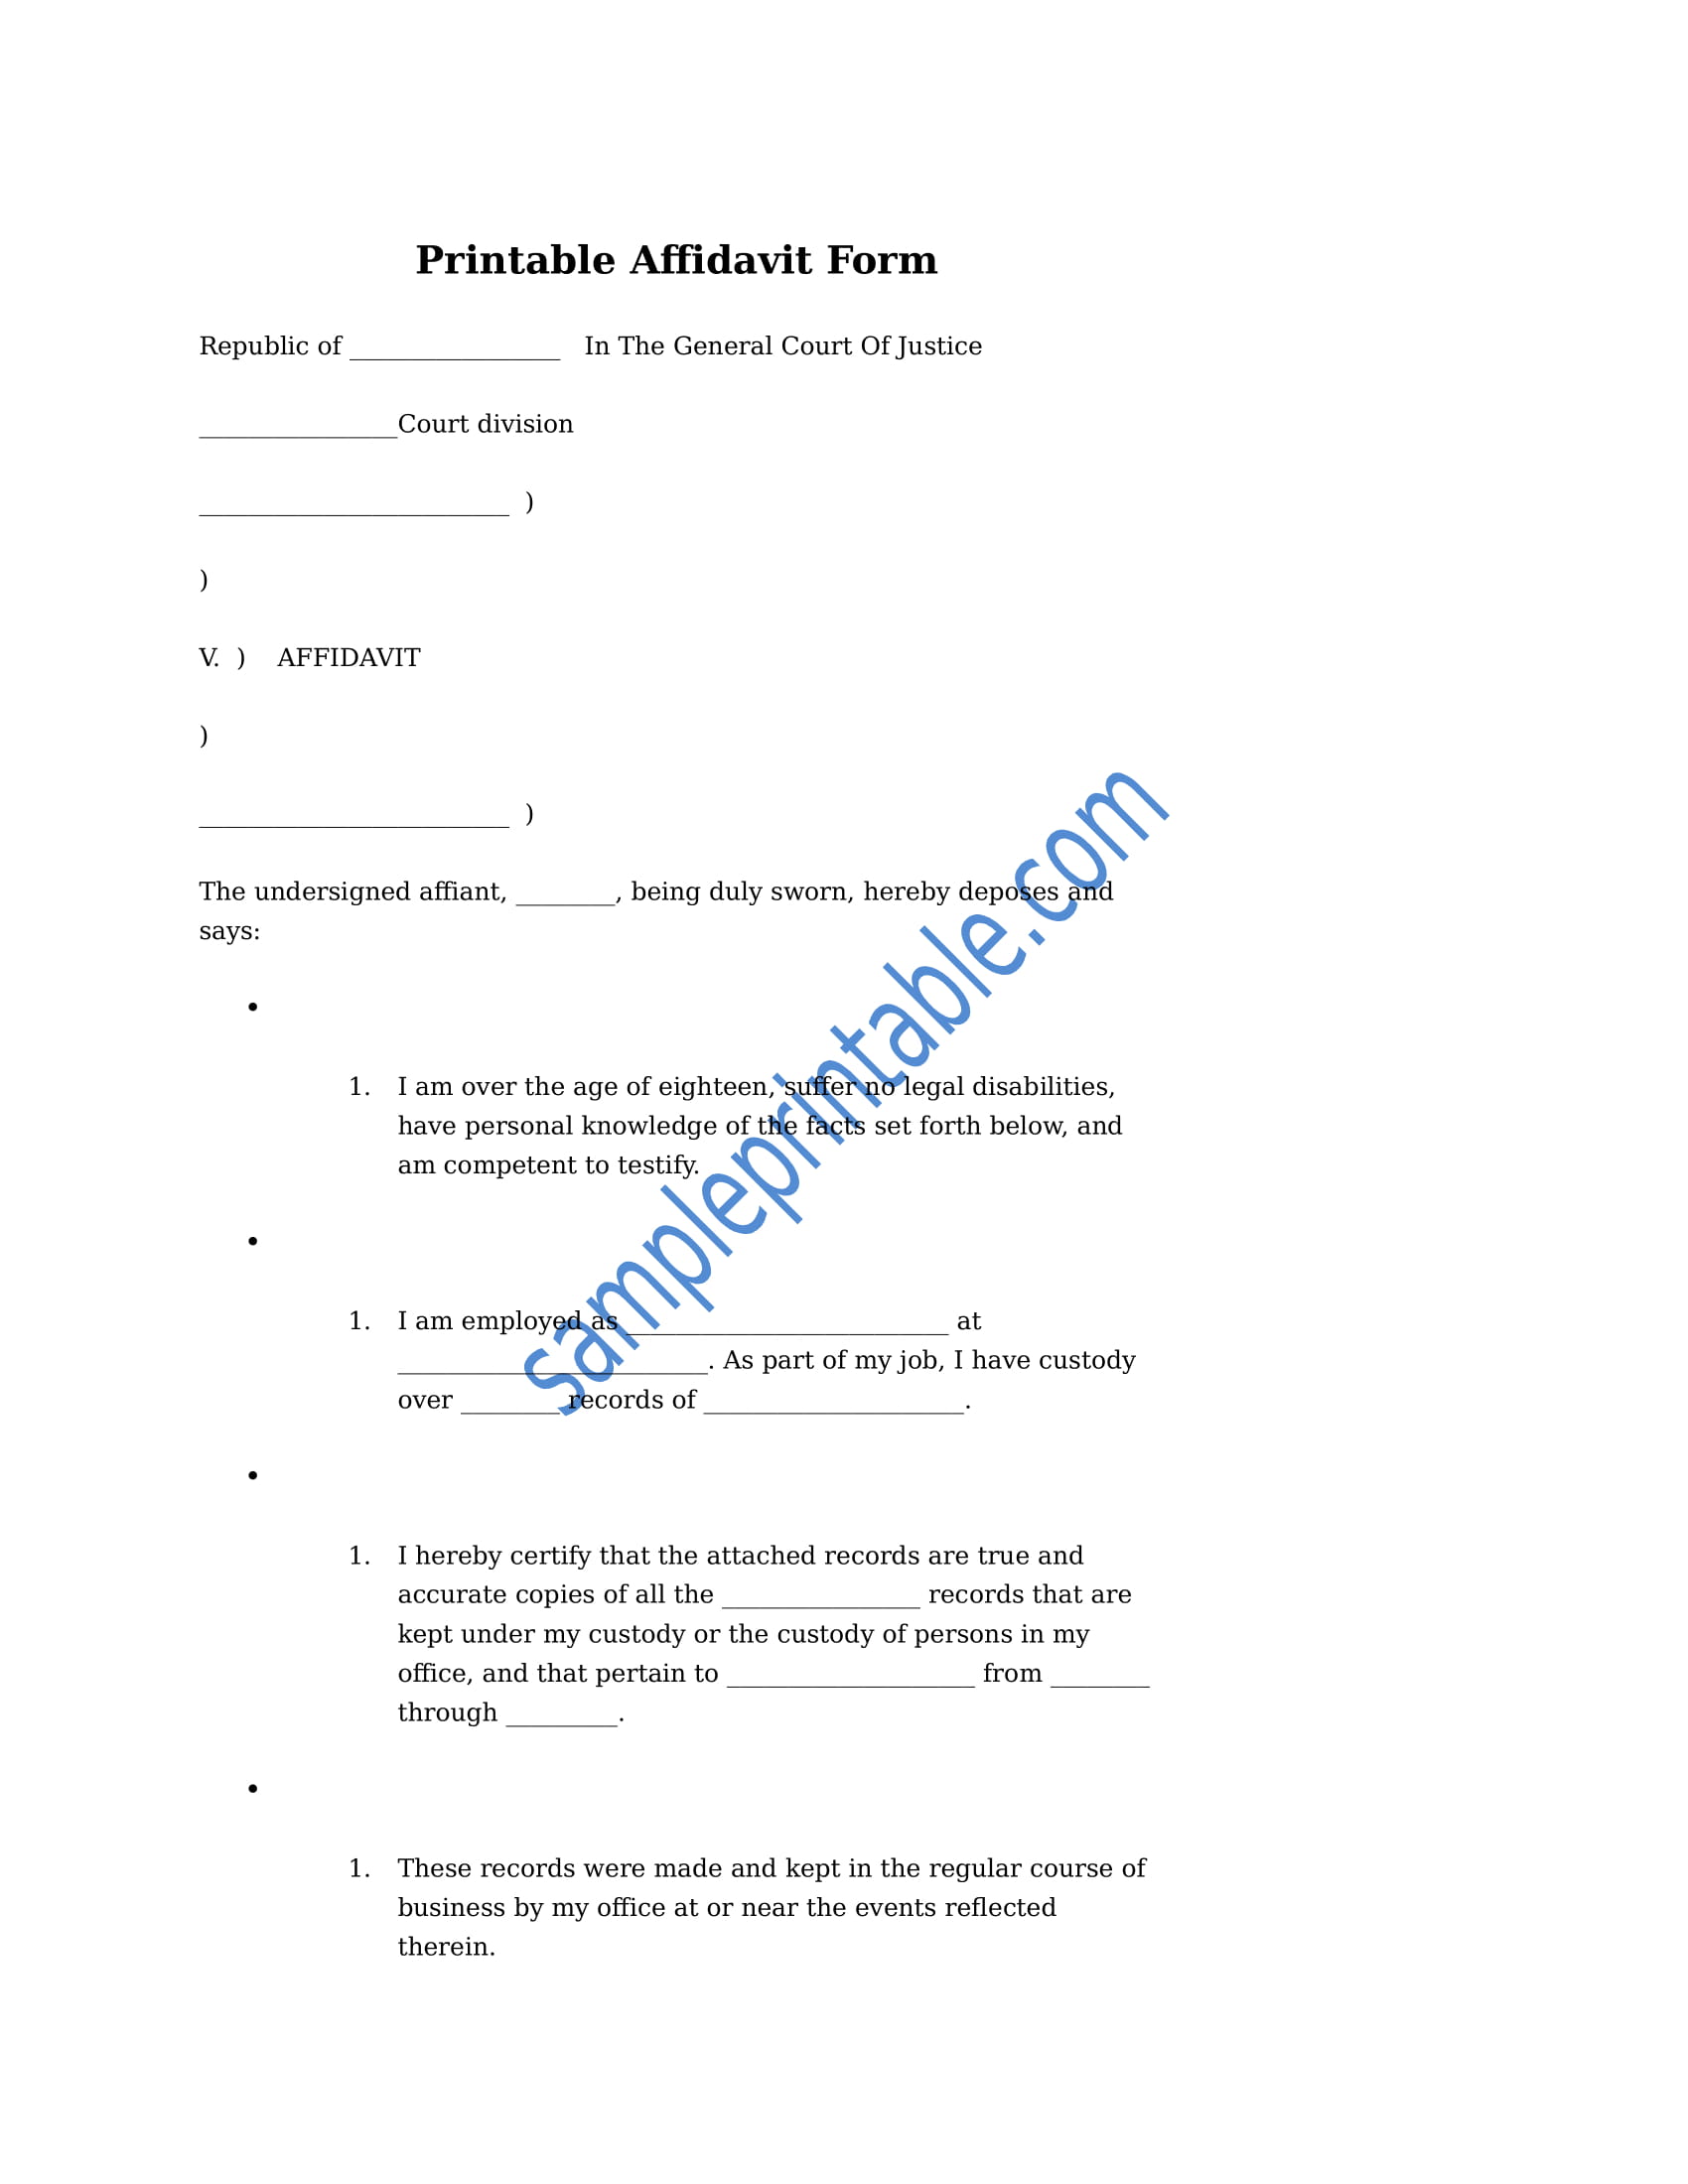 blank-affidavit-form-9-examples-format-pdf-examples